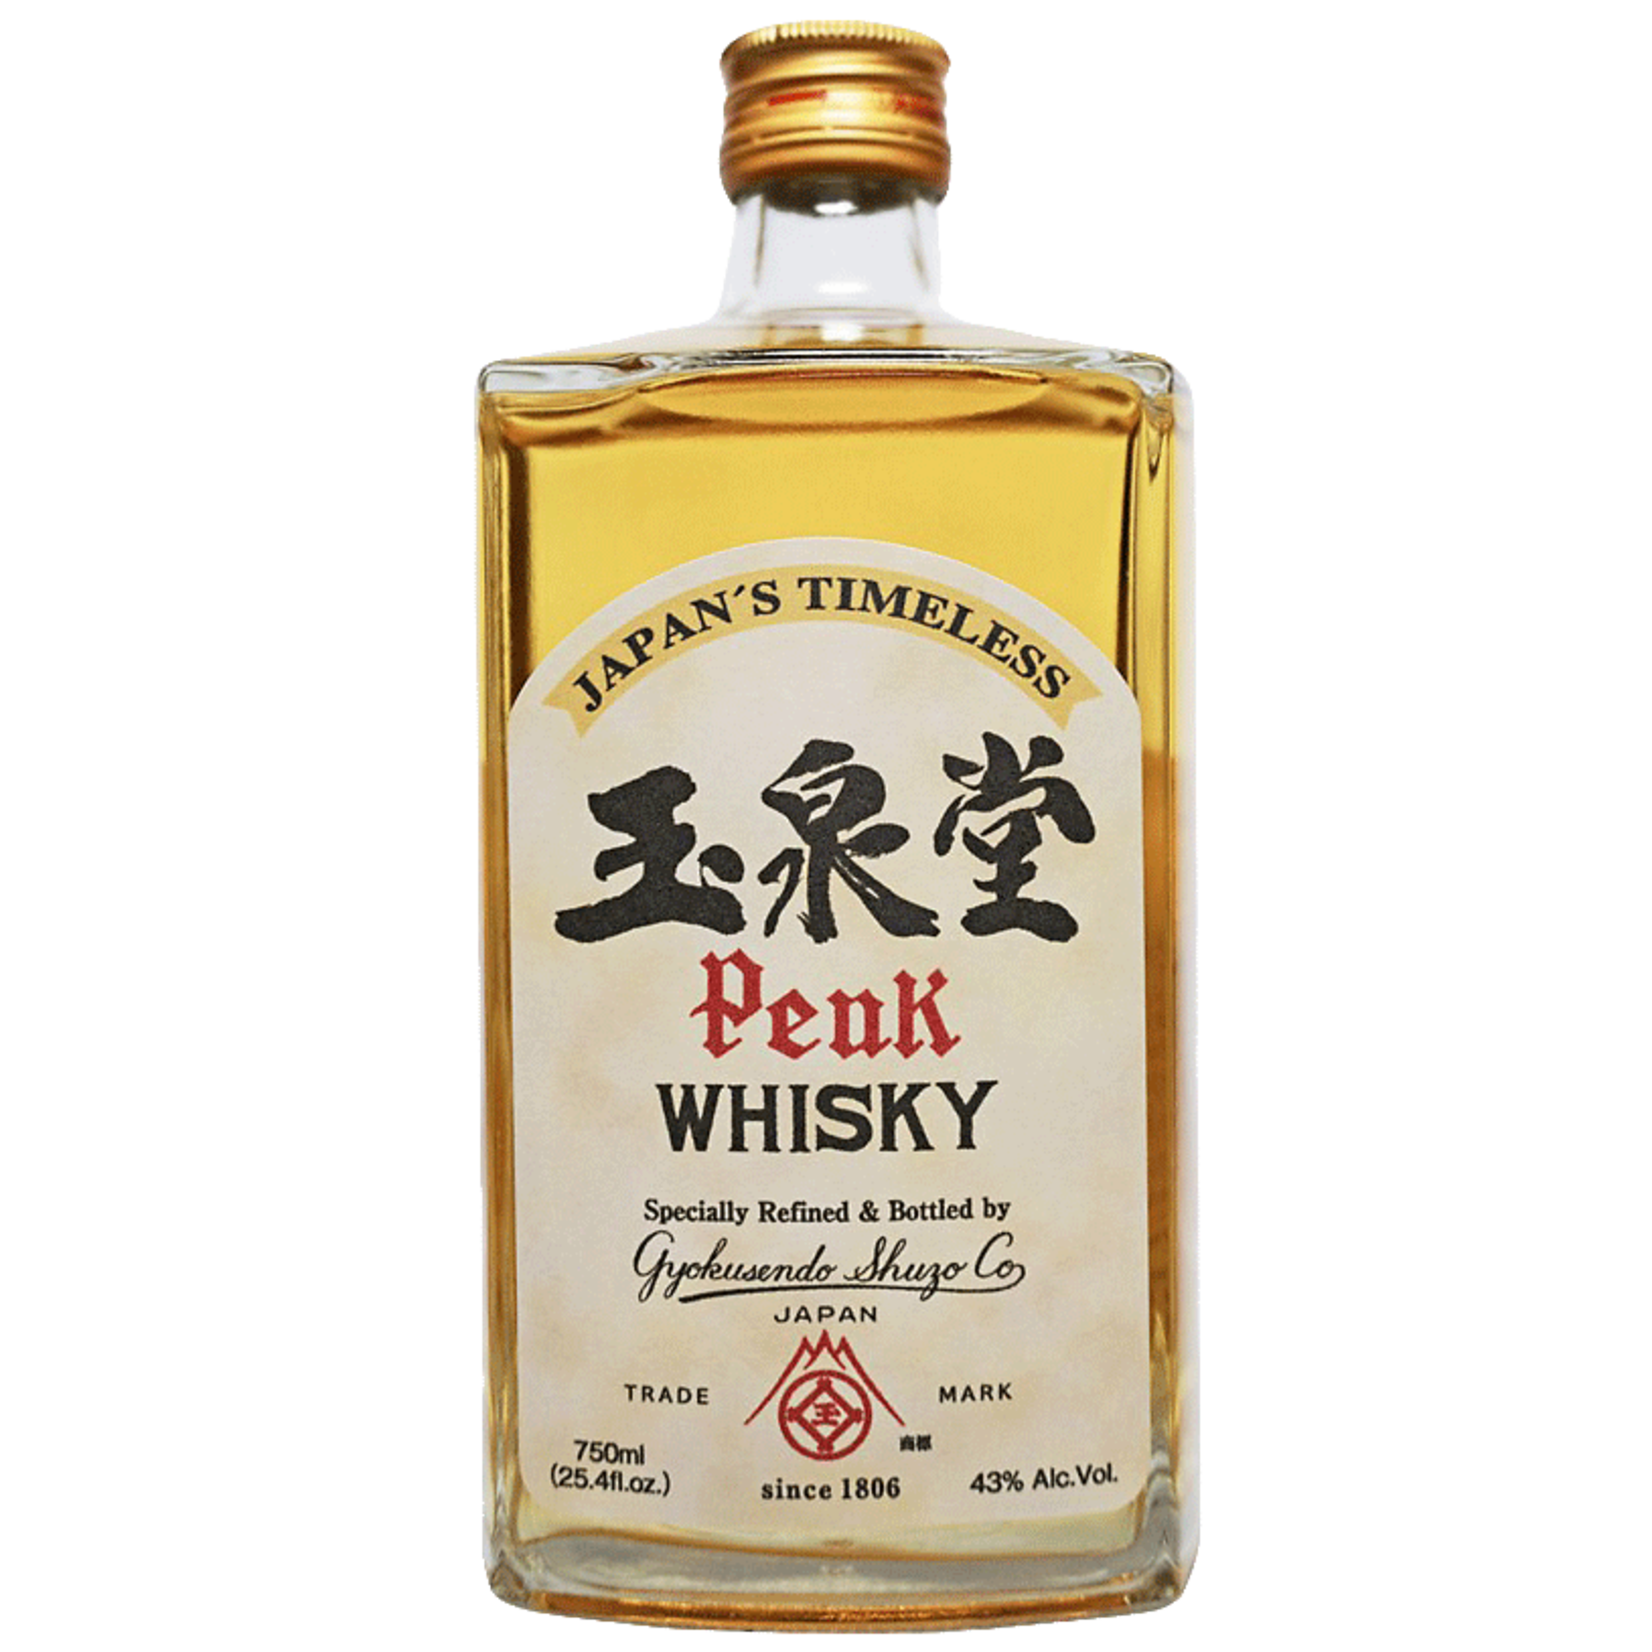 Spirits Gyokusendo Shuzo Co Peak Whisky